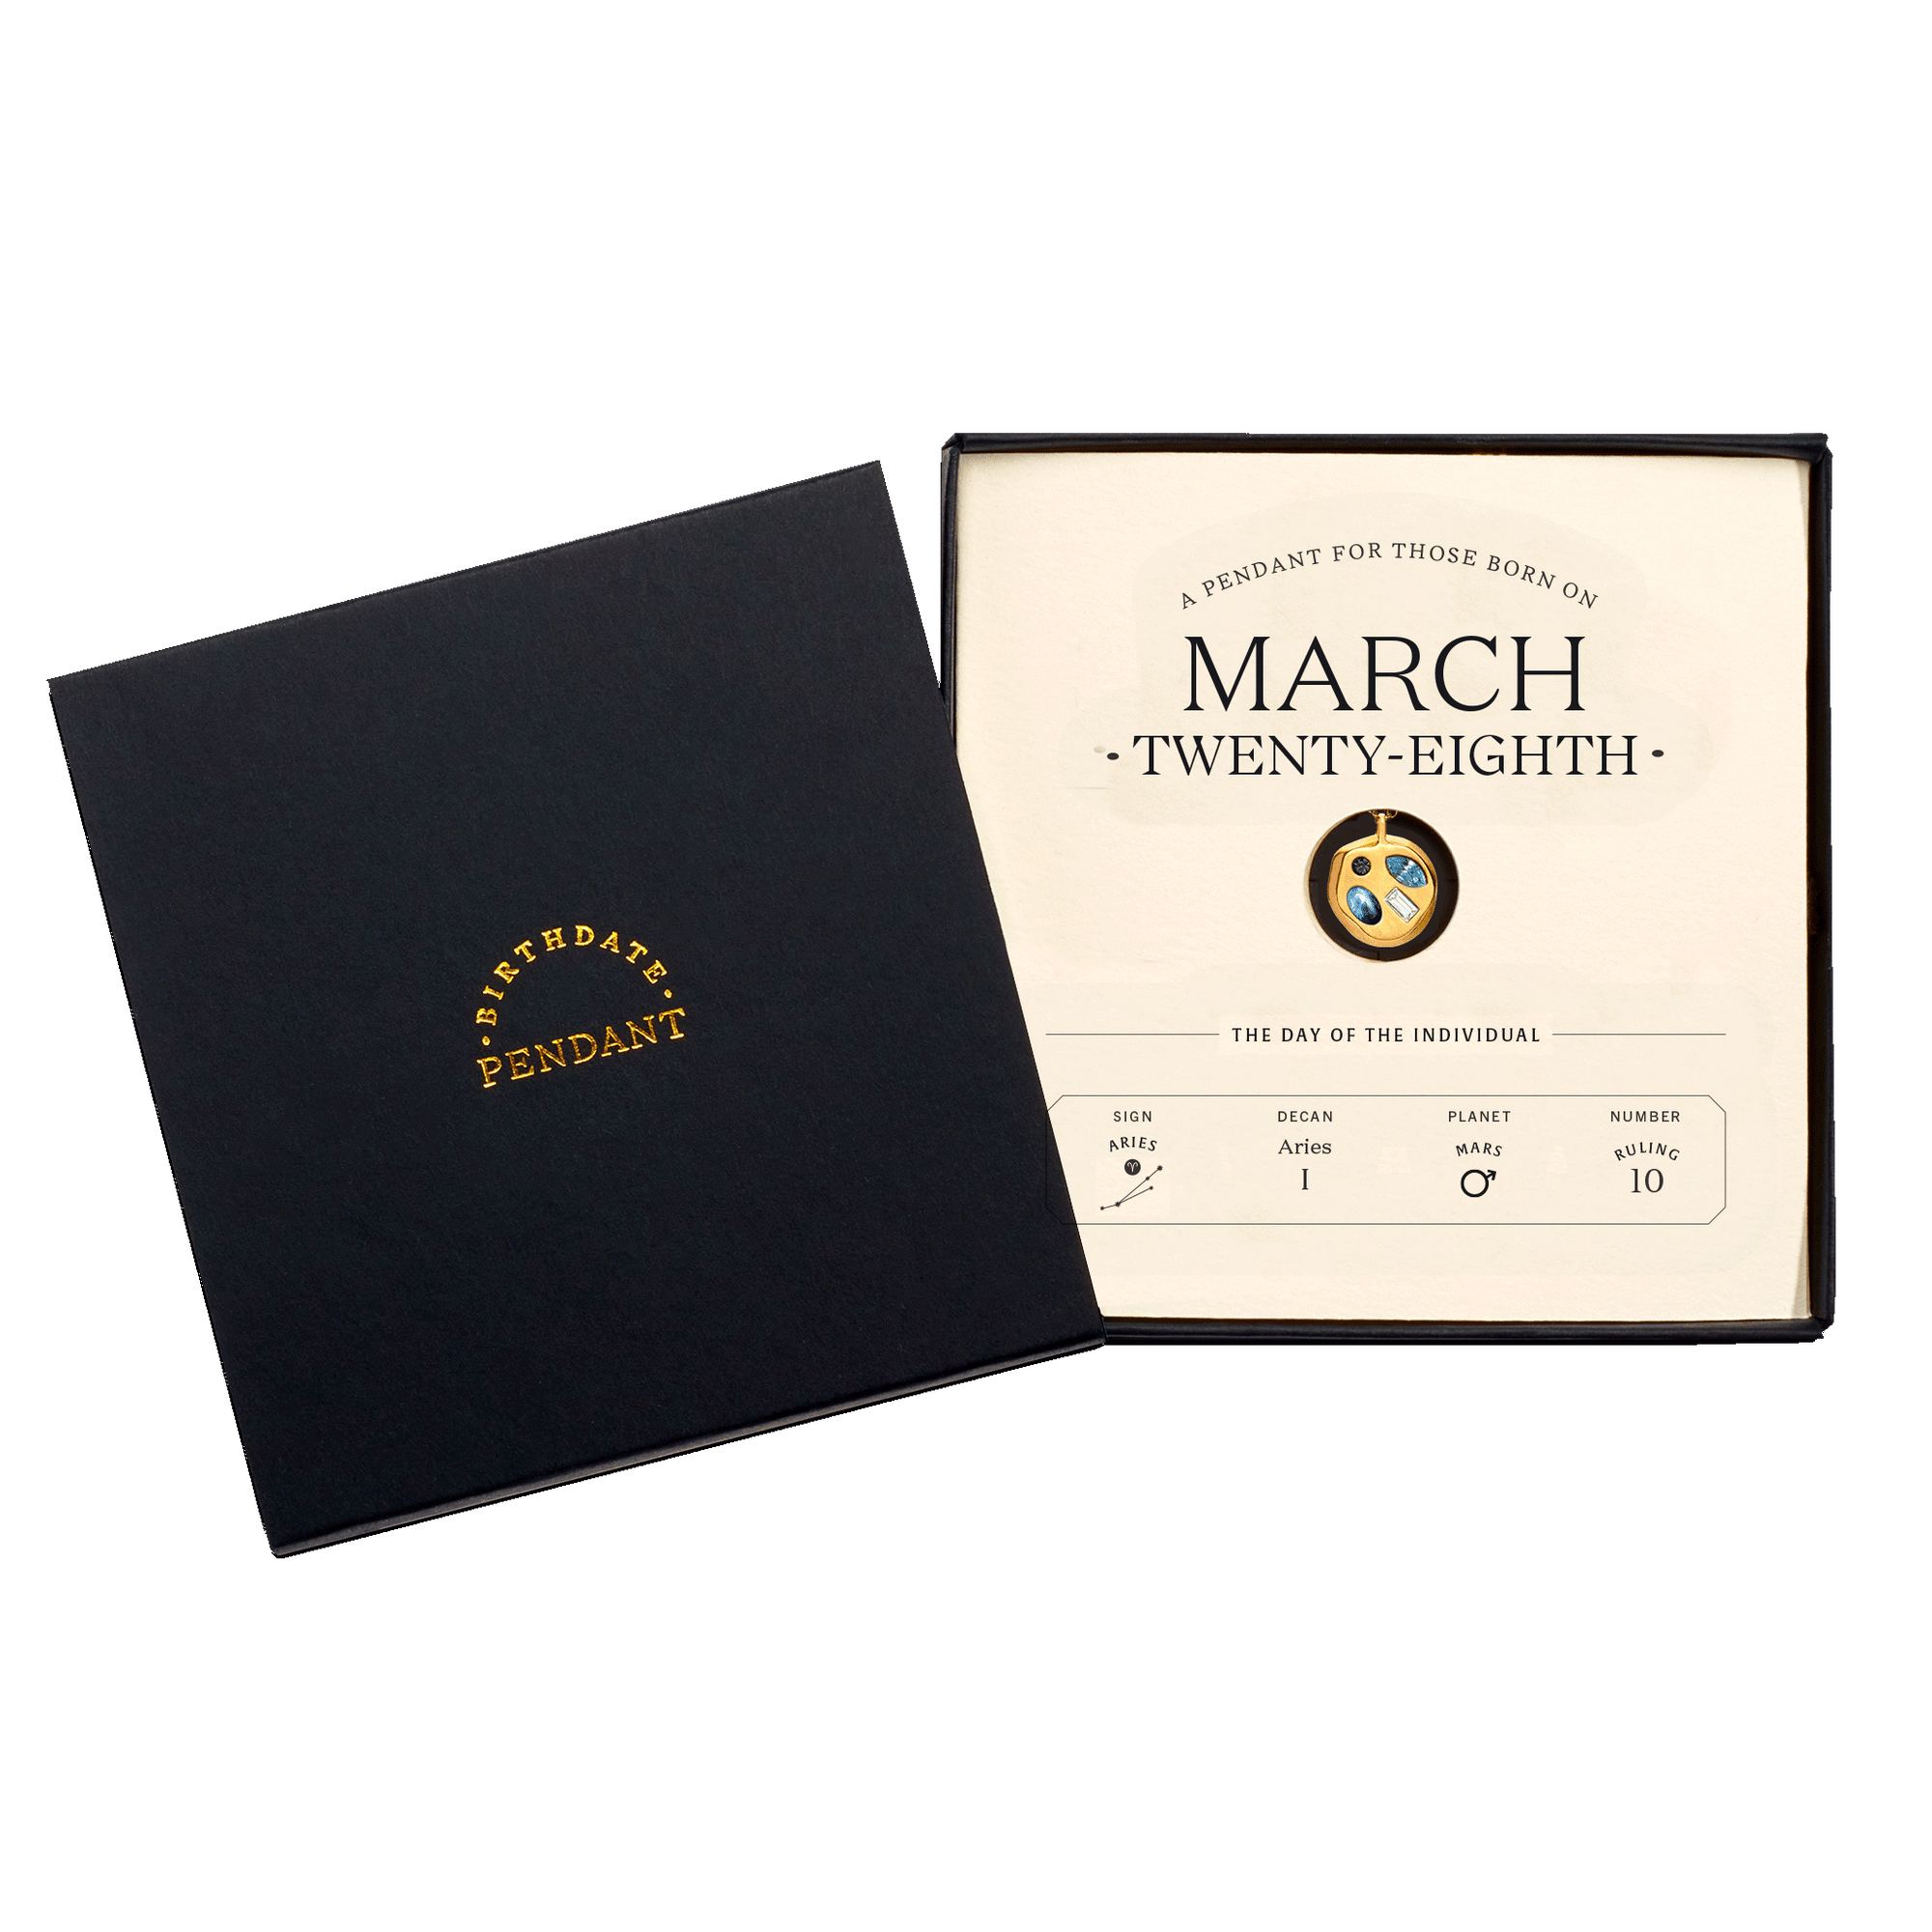 The March Twenty-Eighth Pendant inside its box